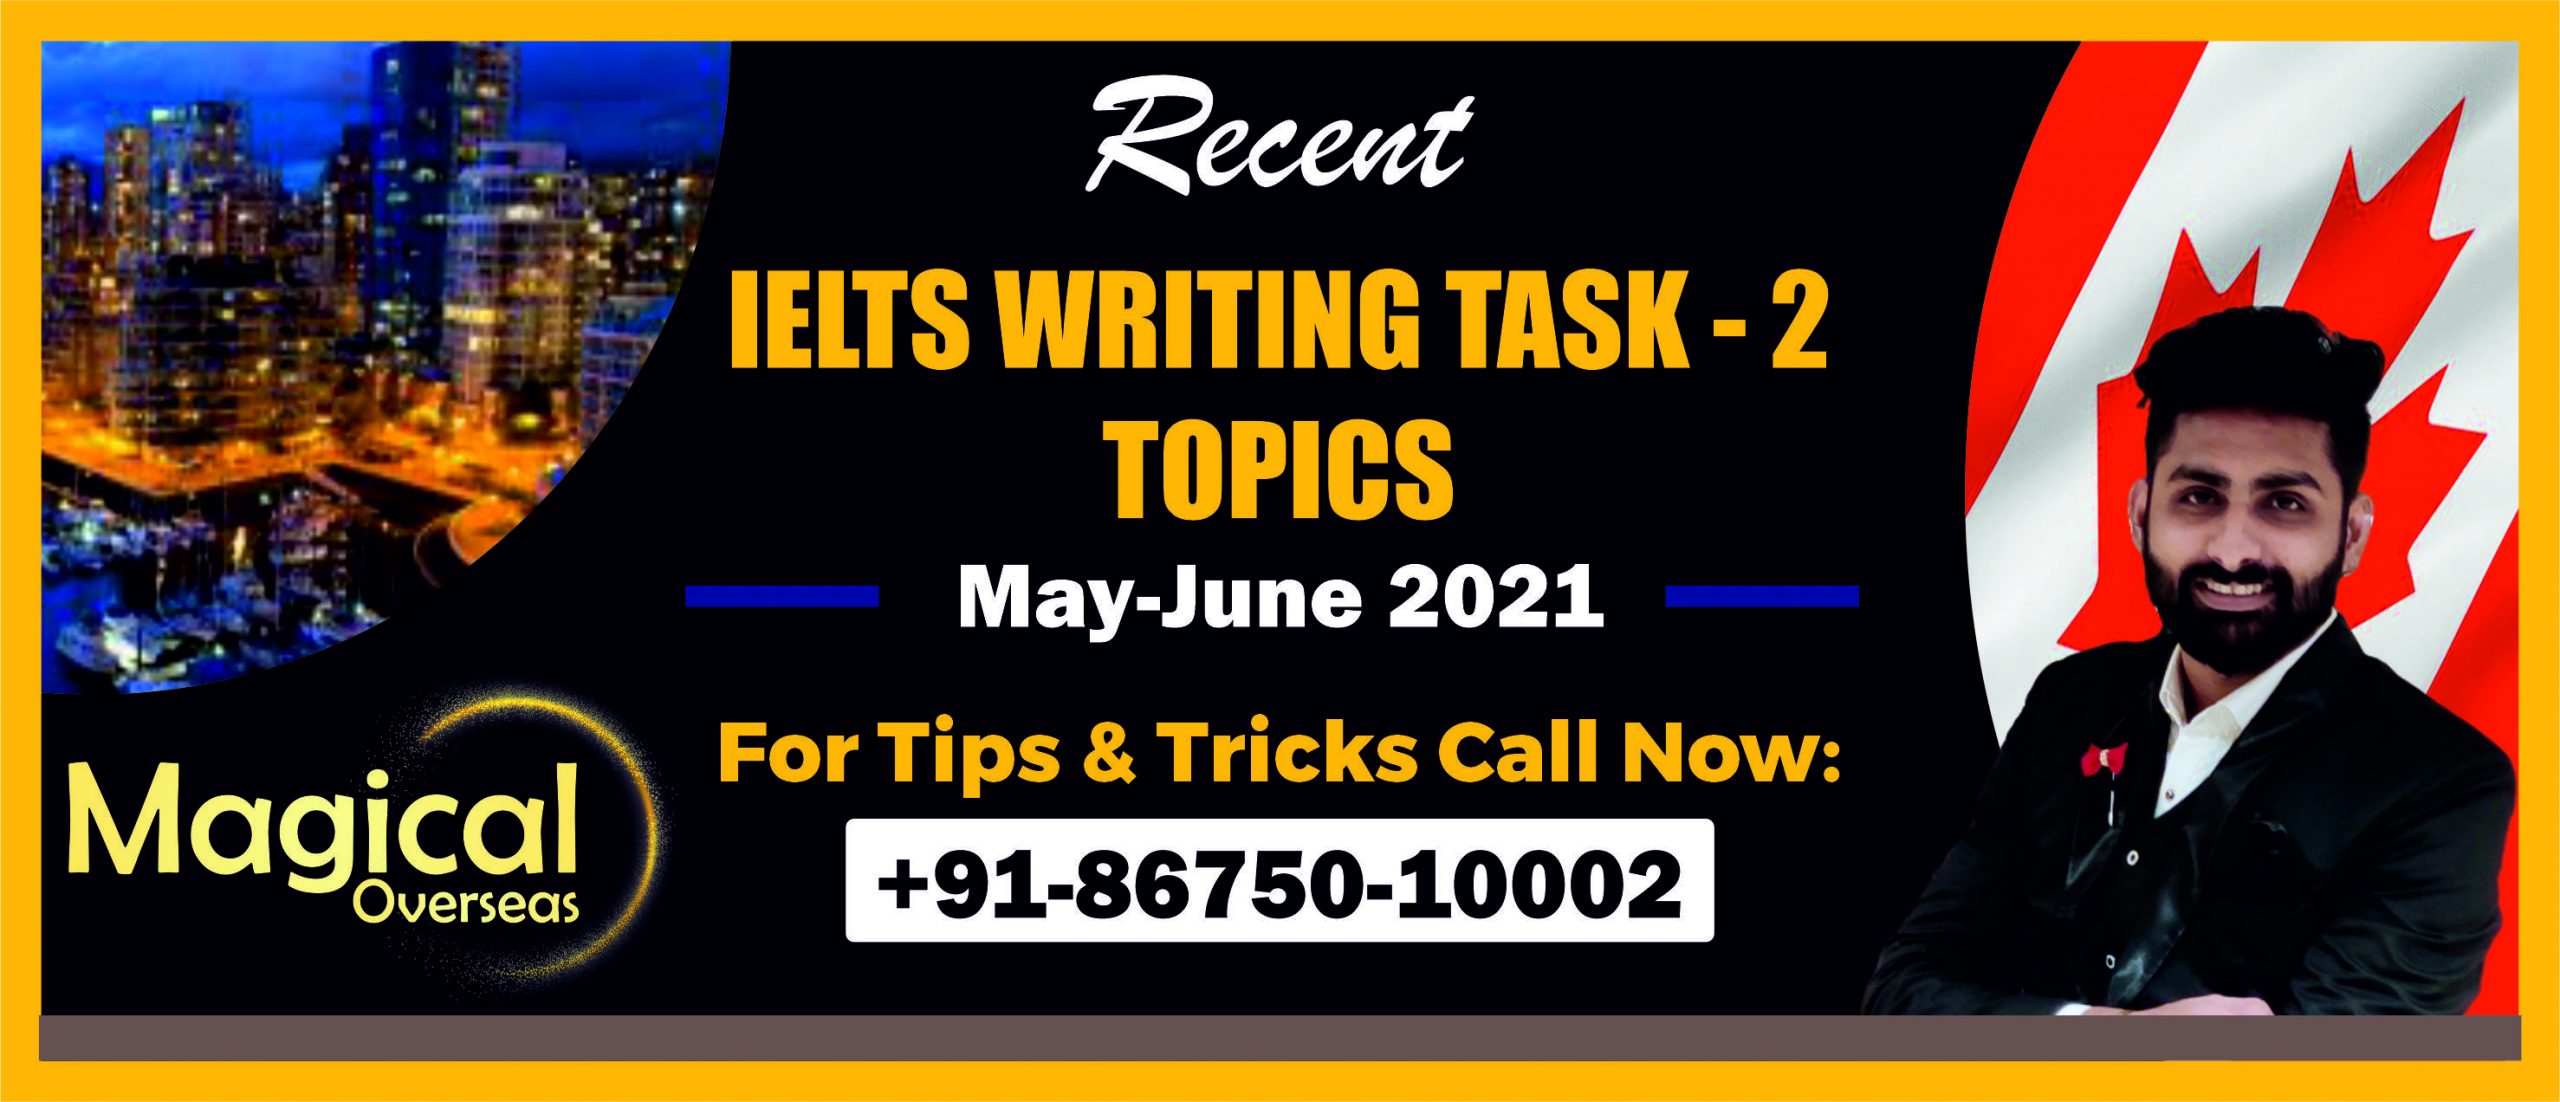 Writing-Task-2-Topics-May-June-2021